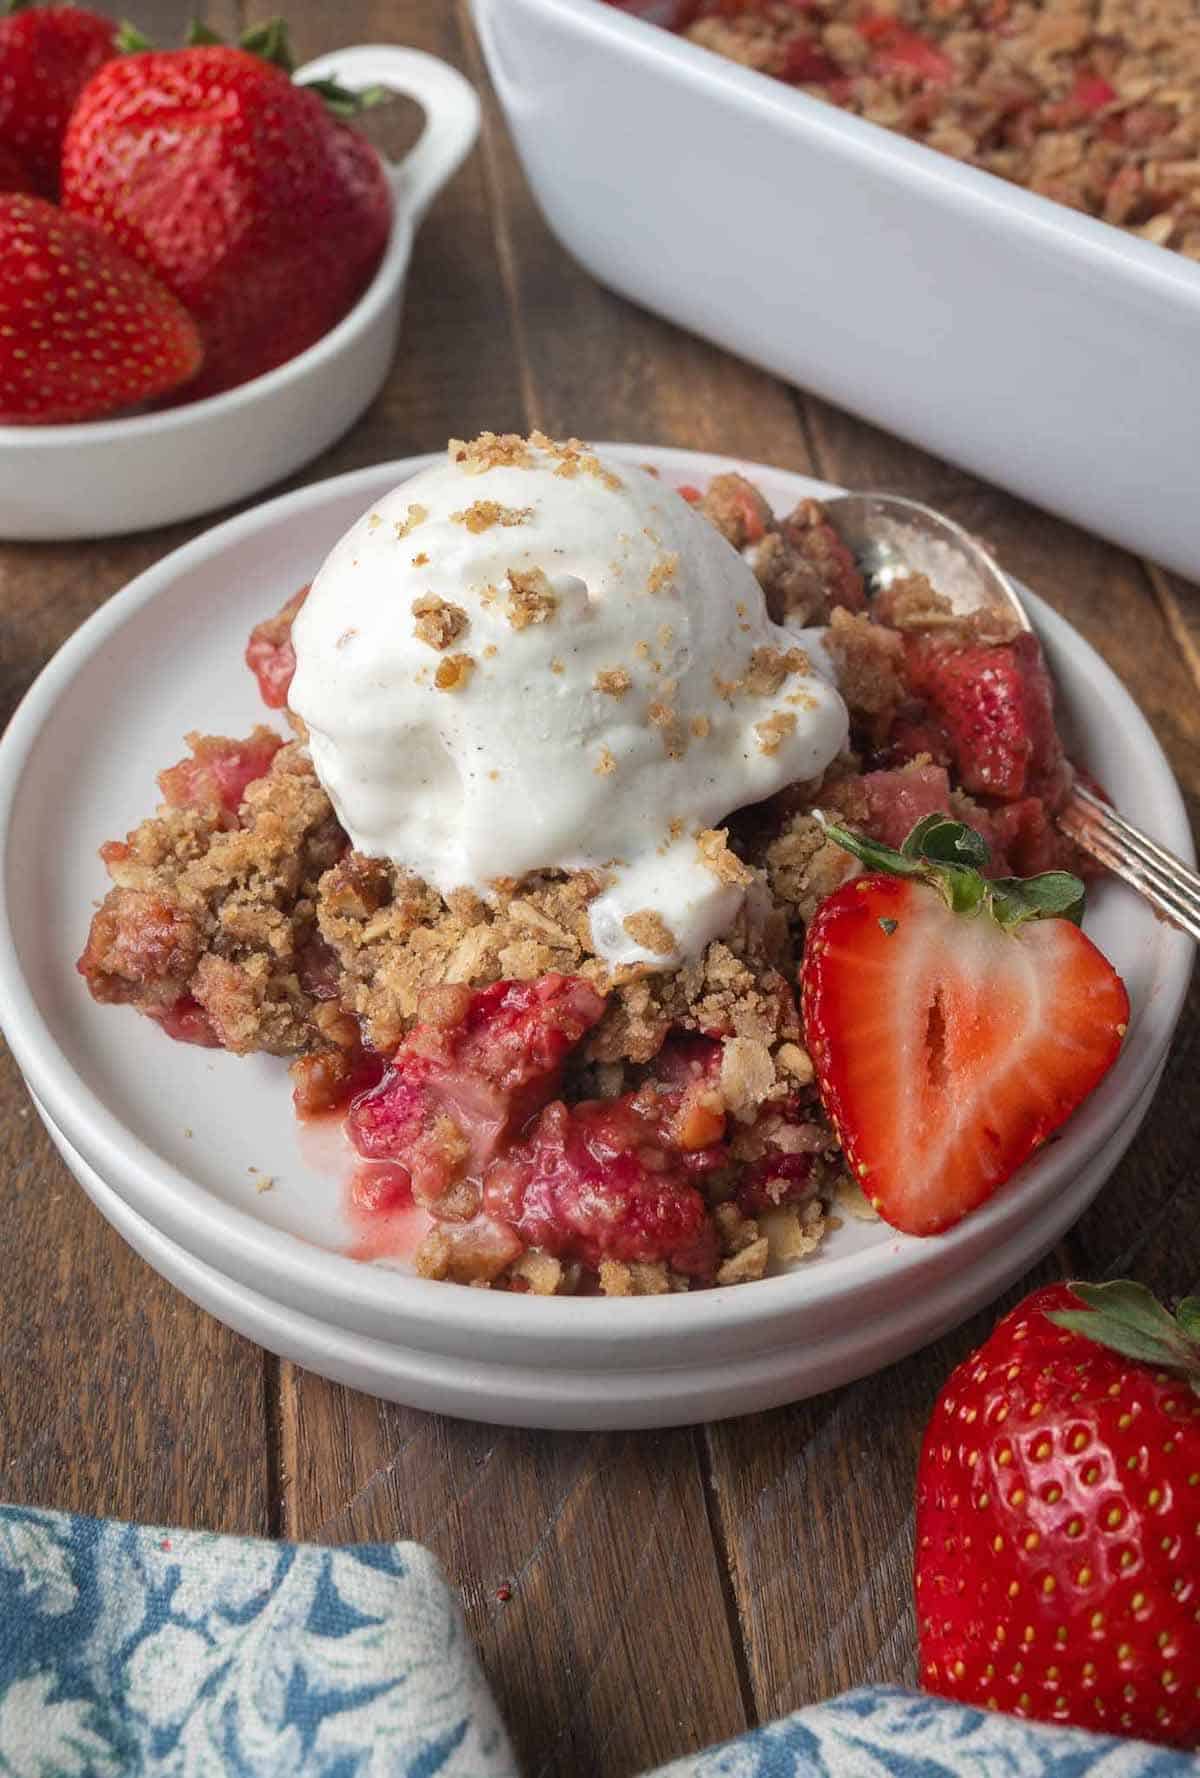 Strawberry rhubarb crisp on a plate with vanilla ice cream.